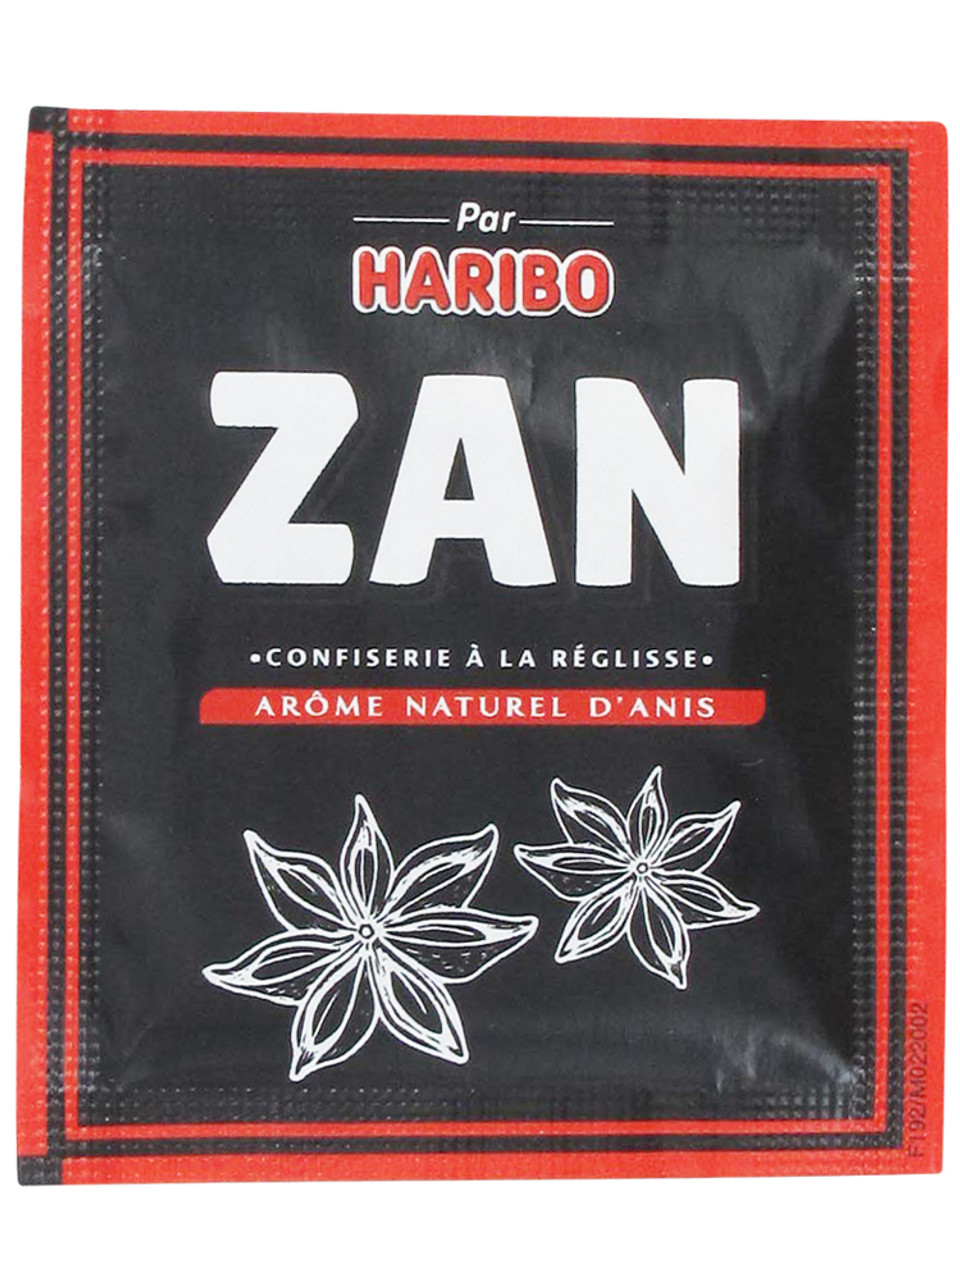 Zan Original Anise-Flavored Licorice